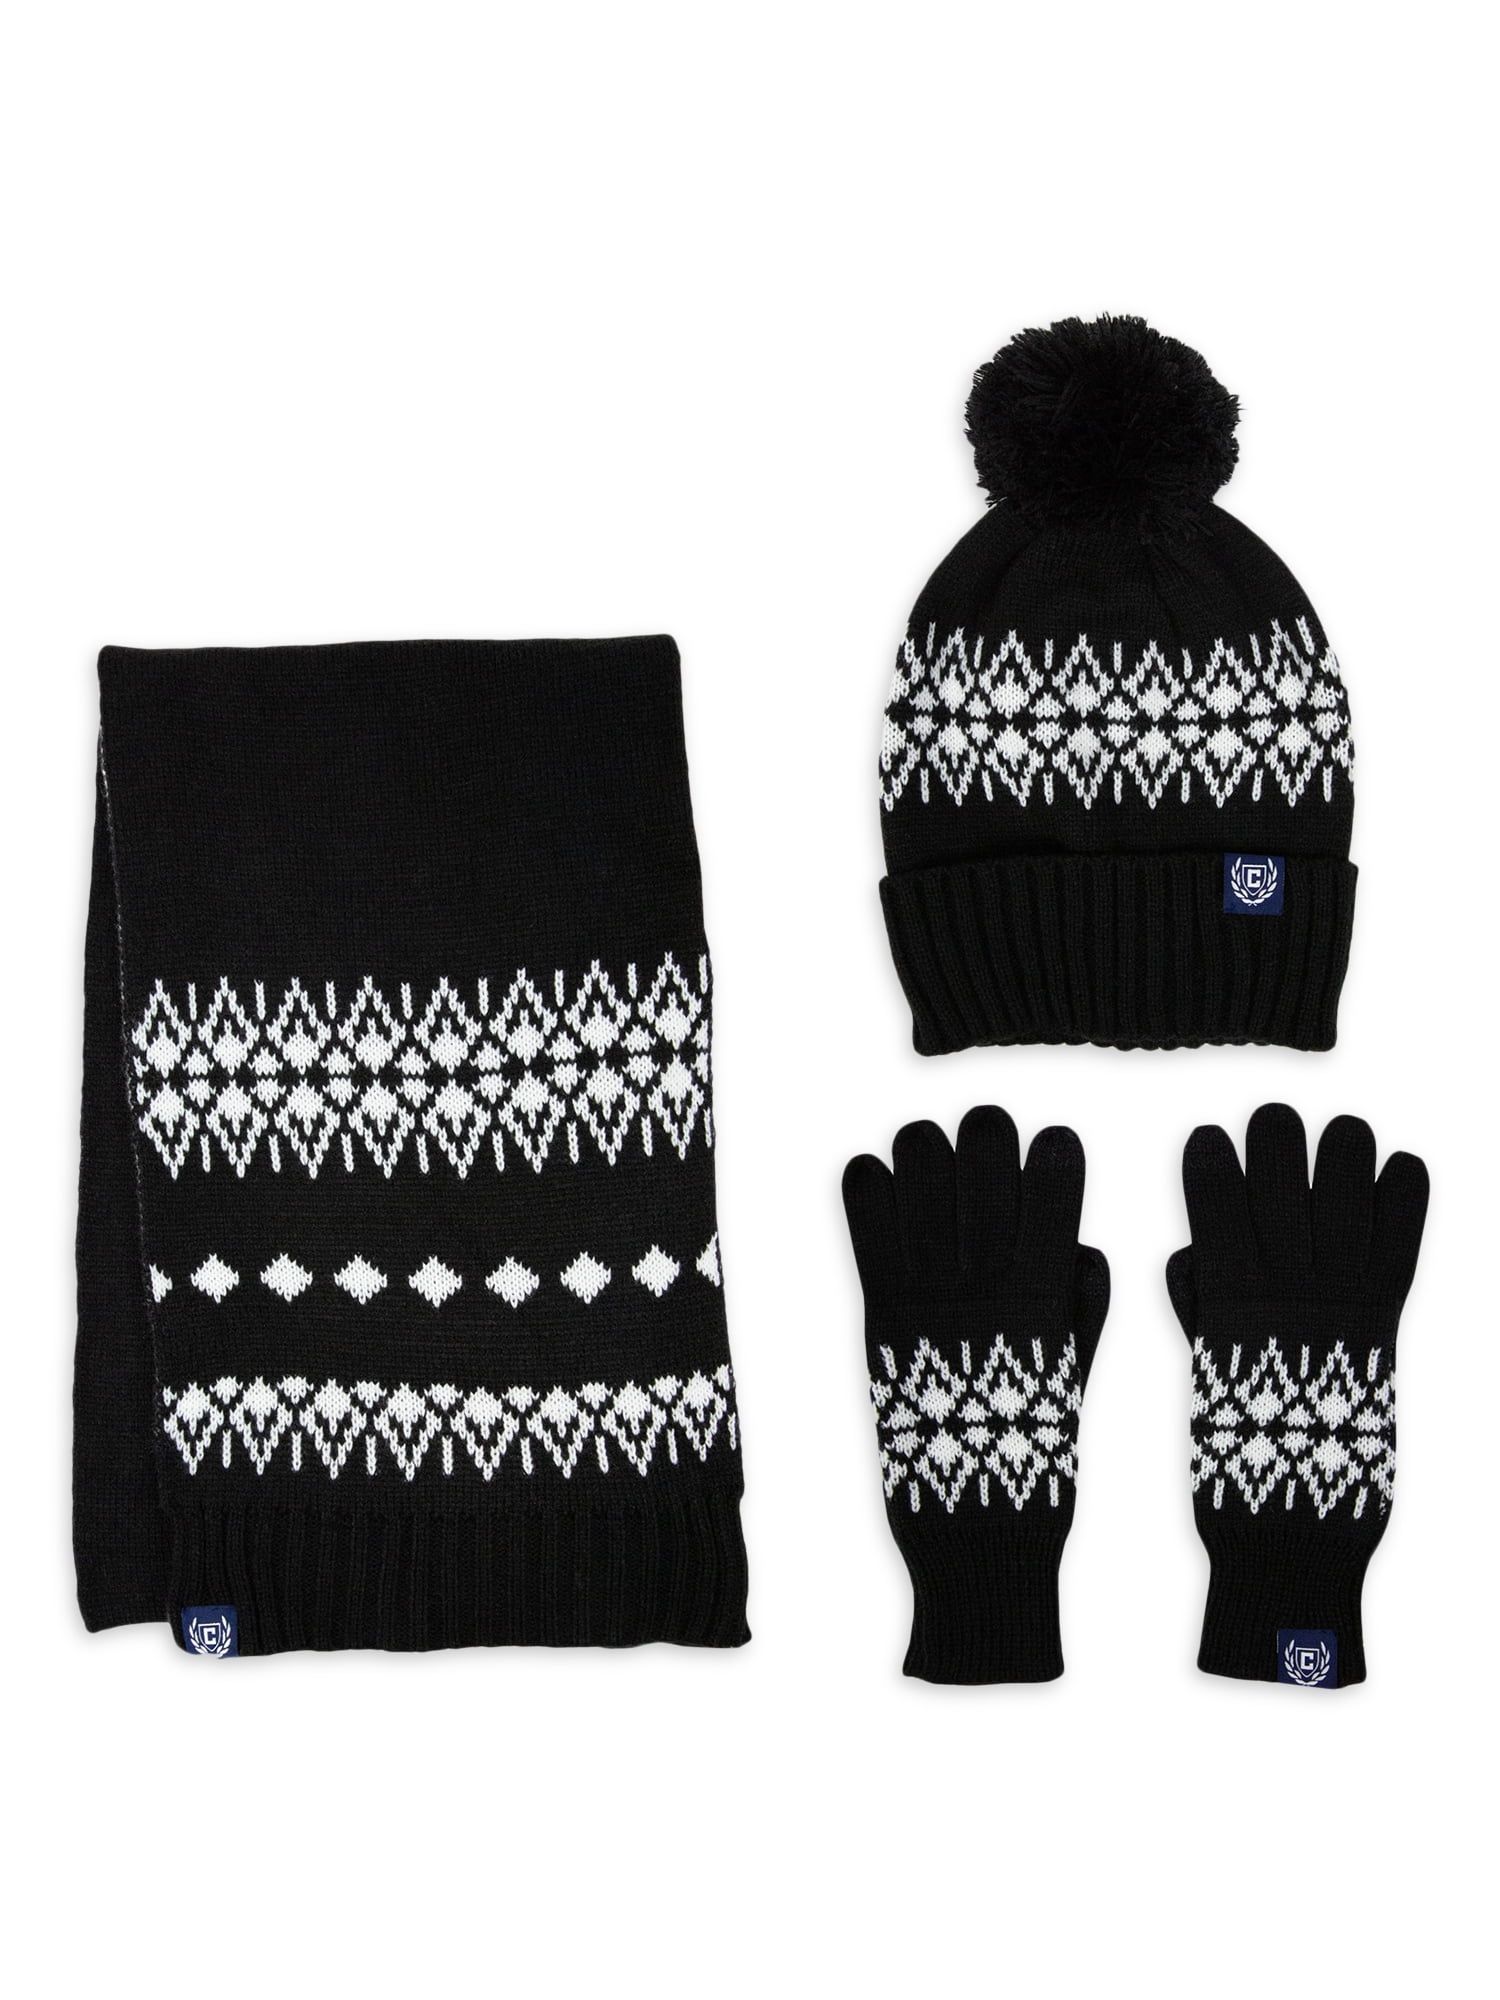 Chaps Brand Women's Fairisle Knit 3 Piece Scarf, Beanie Style Hat and Glove Set | Walmart (US)